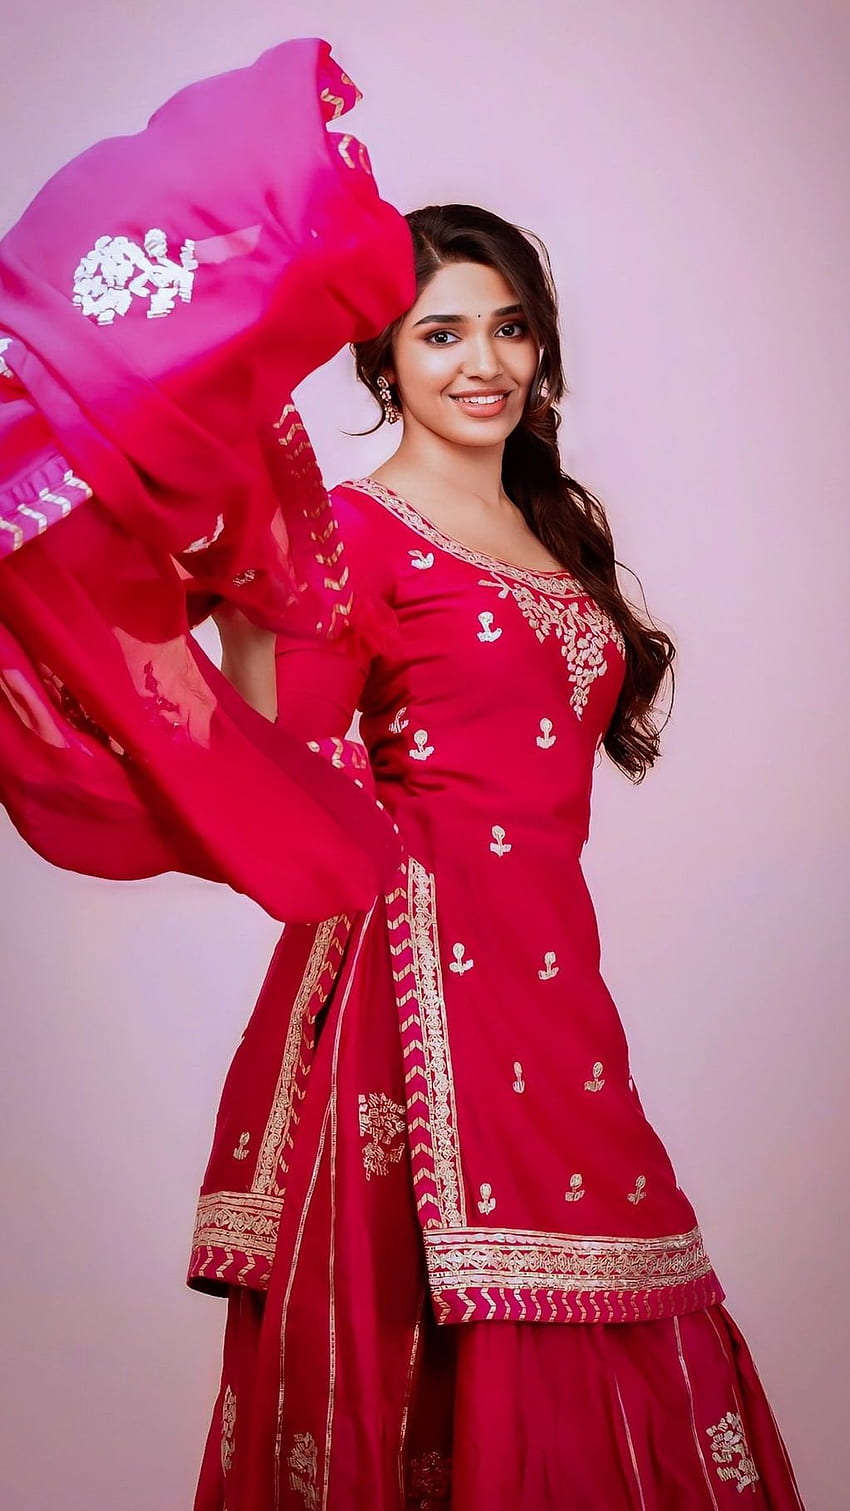 Krithi shetty, aktris telugu wallpaper ponsel HD